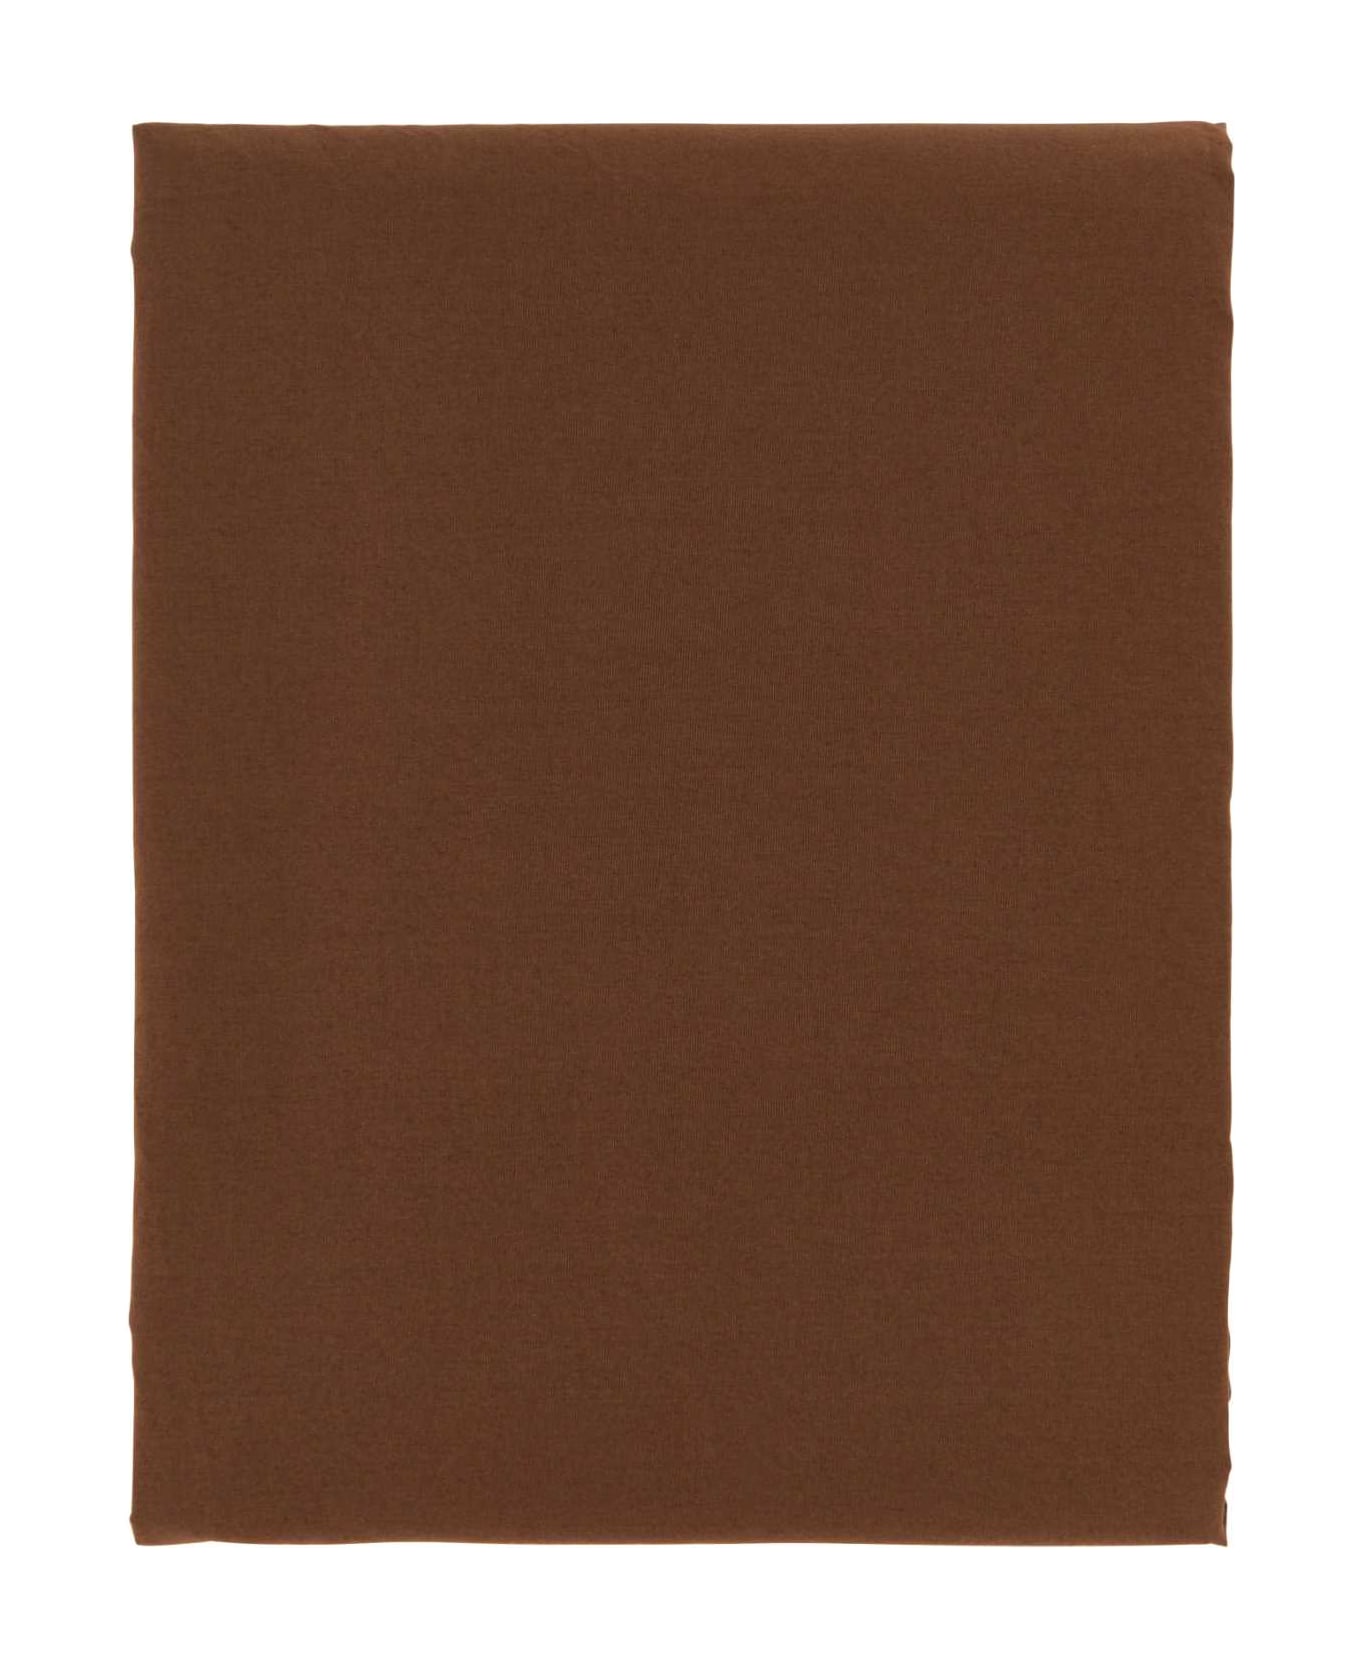 Tekla Chocolate Cotton Flat Sheet - COCOABROWN